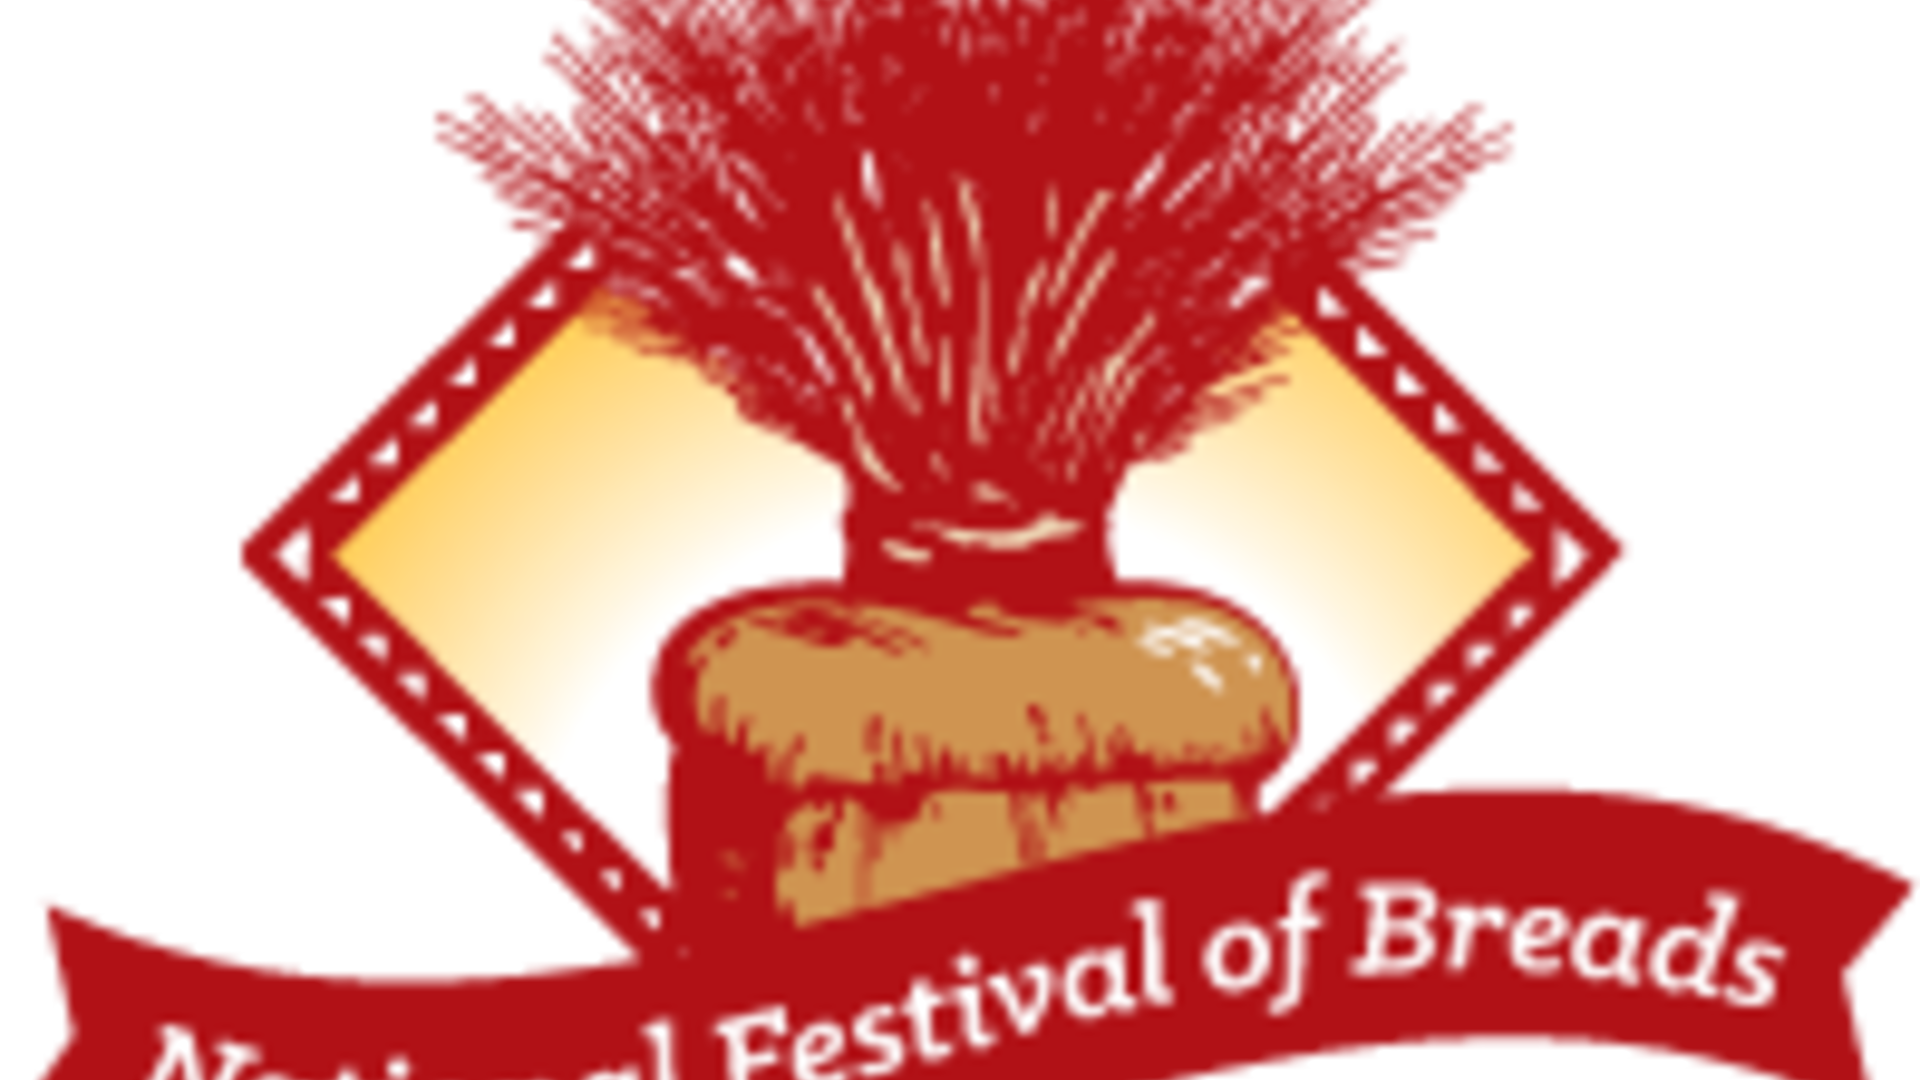 National Festival Of Breads